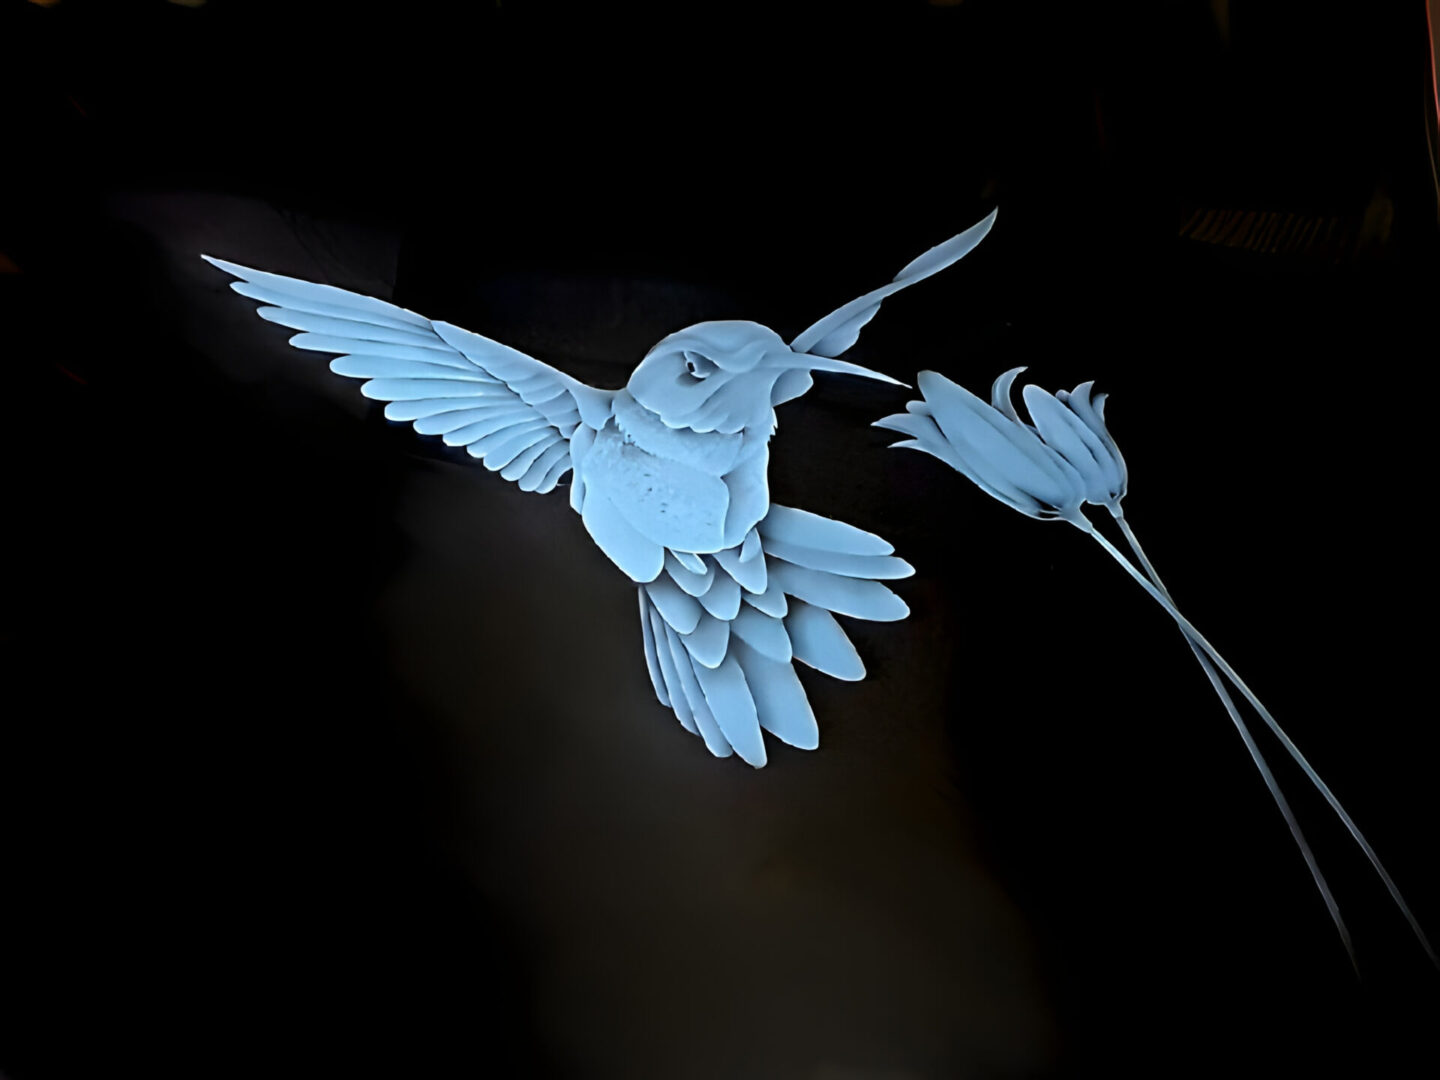 A paper art installation featuring a blue bird in flight approaching a flower, displayed against a dark background.